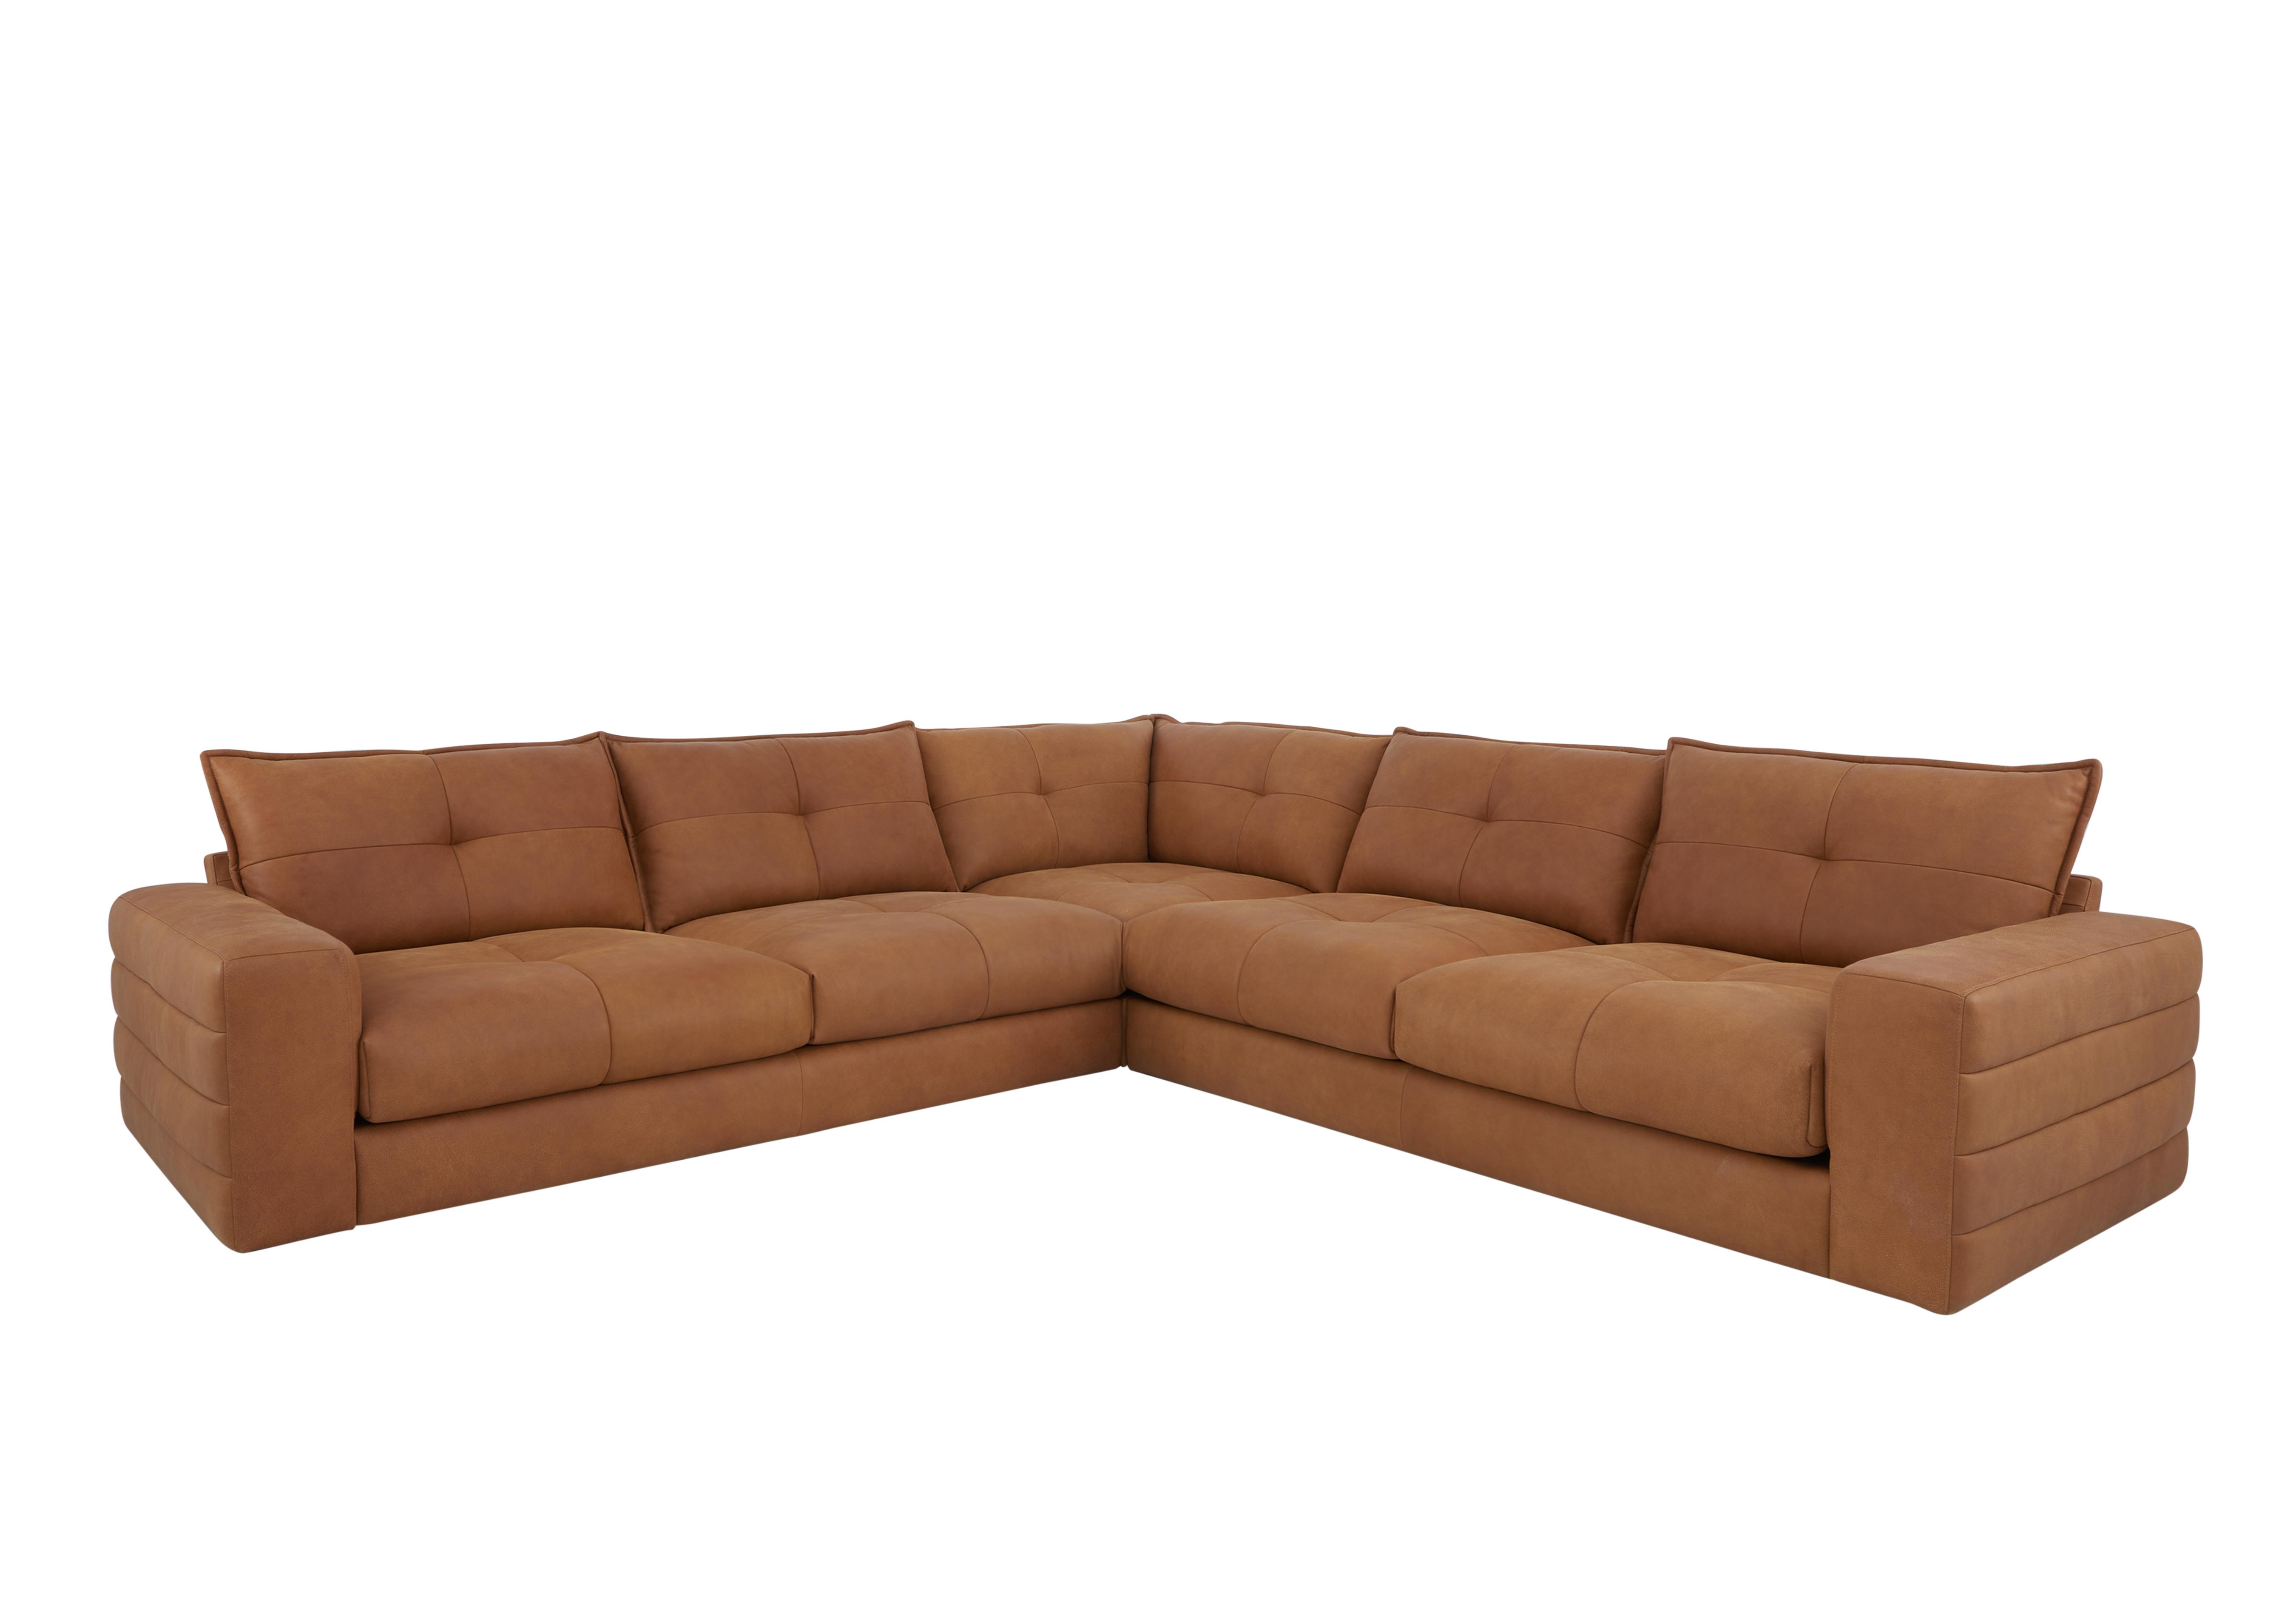 Boutique Brando Large Leather Corner Sofa in Stone Washed Tan on Furniture Village